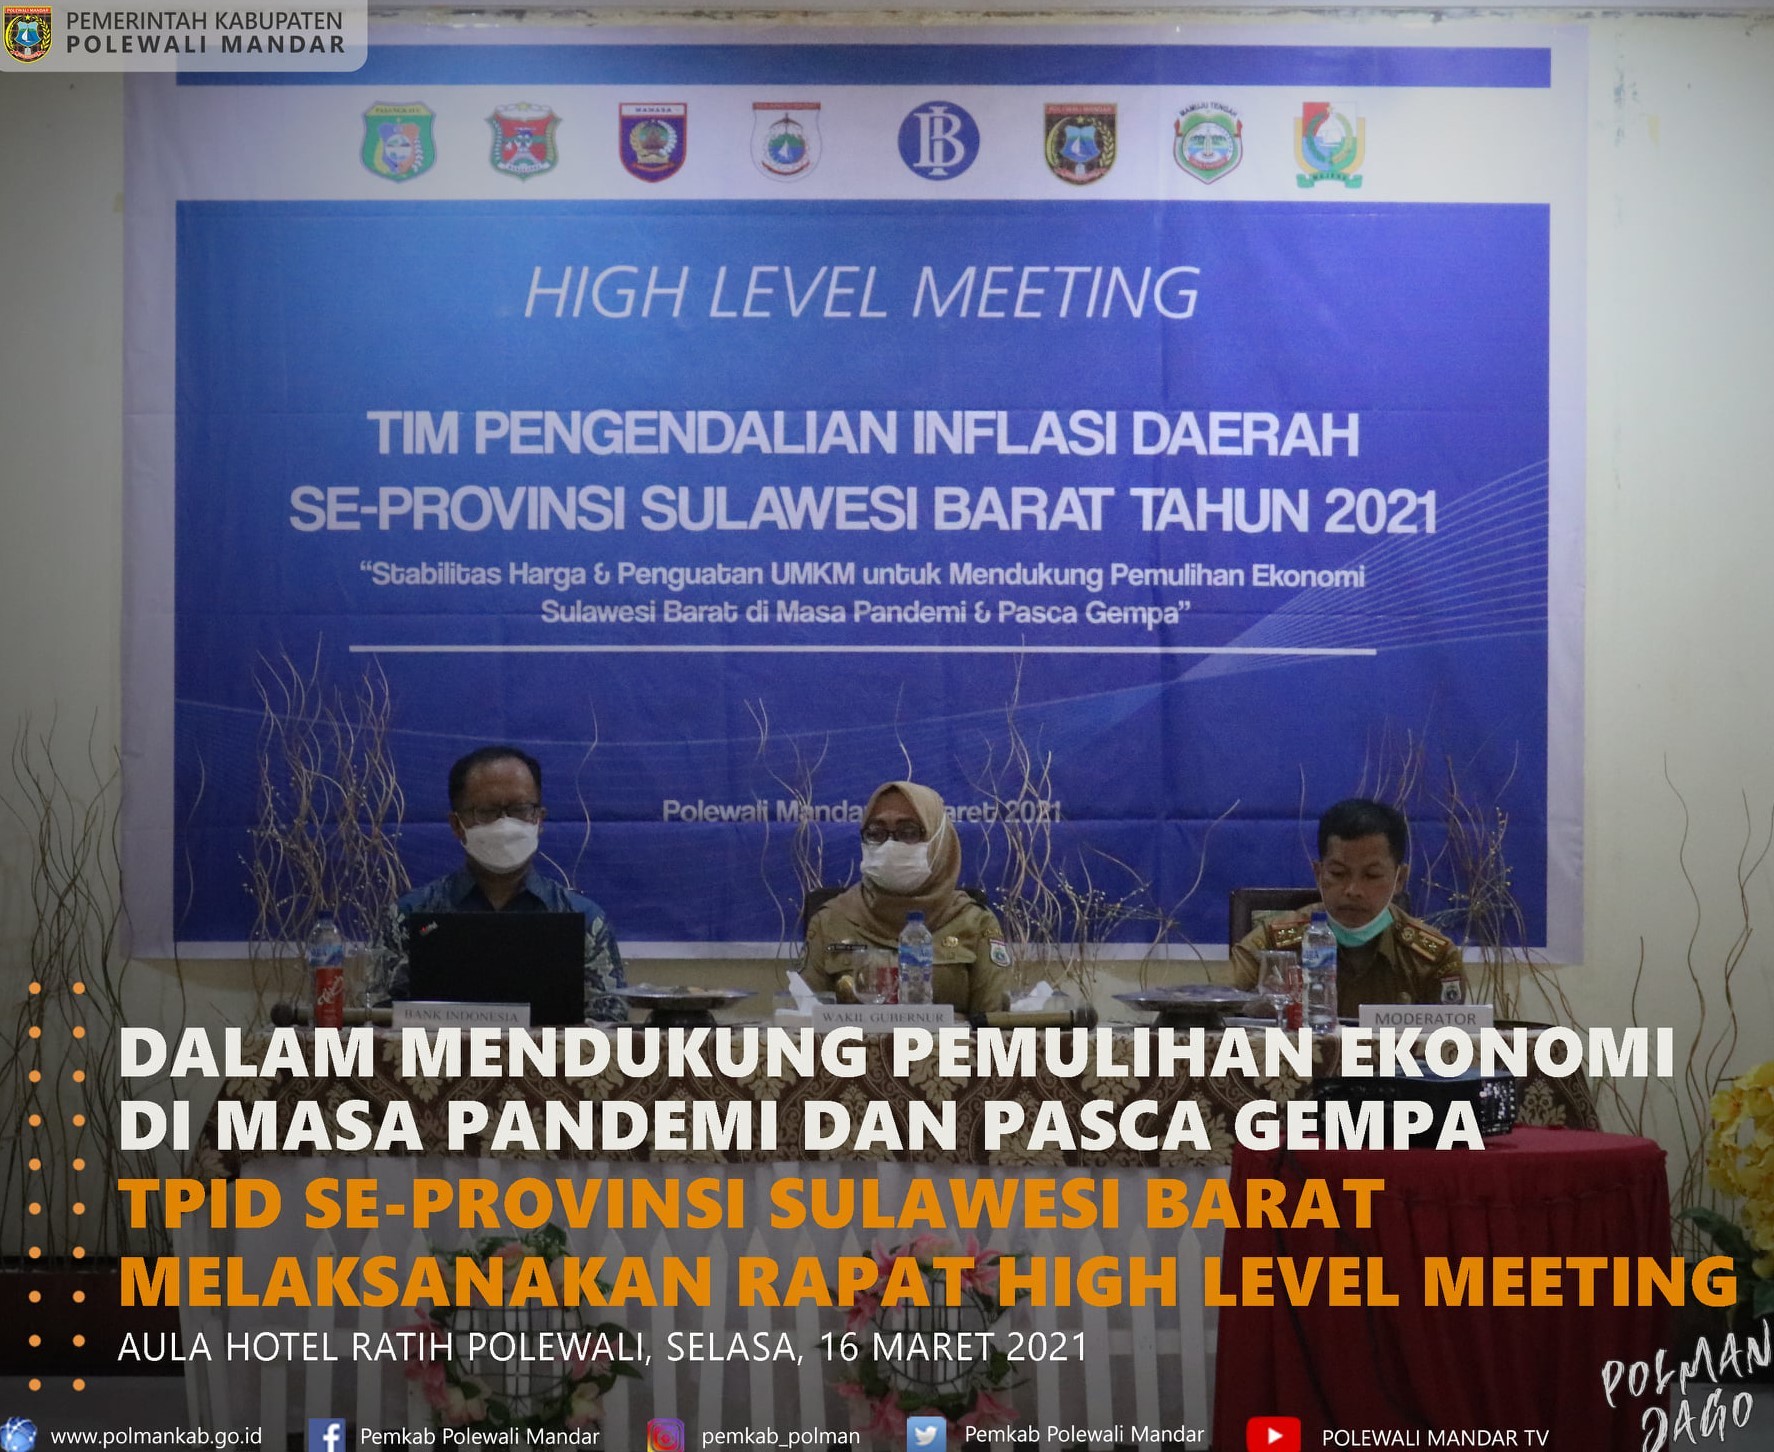 Stabilitas Harga dan Penguatan UMKM, Tema High Level Meeting TPID Provinsi Sulawesi Barat